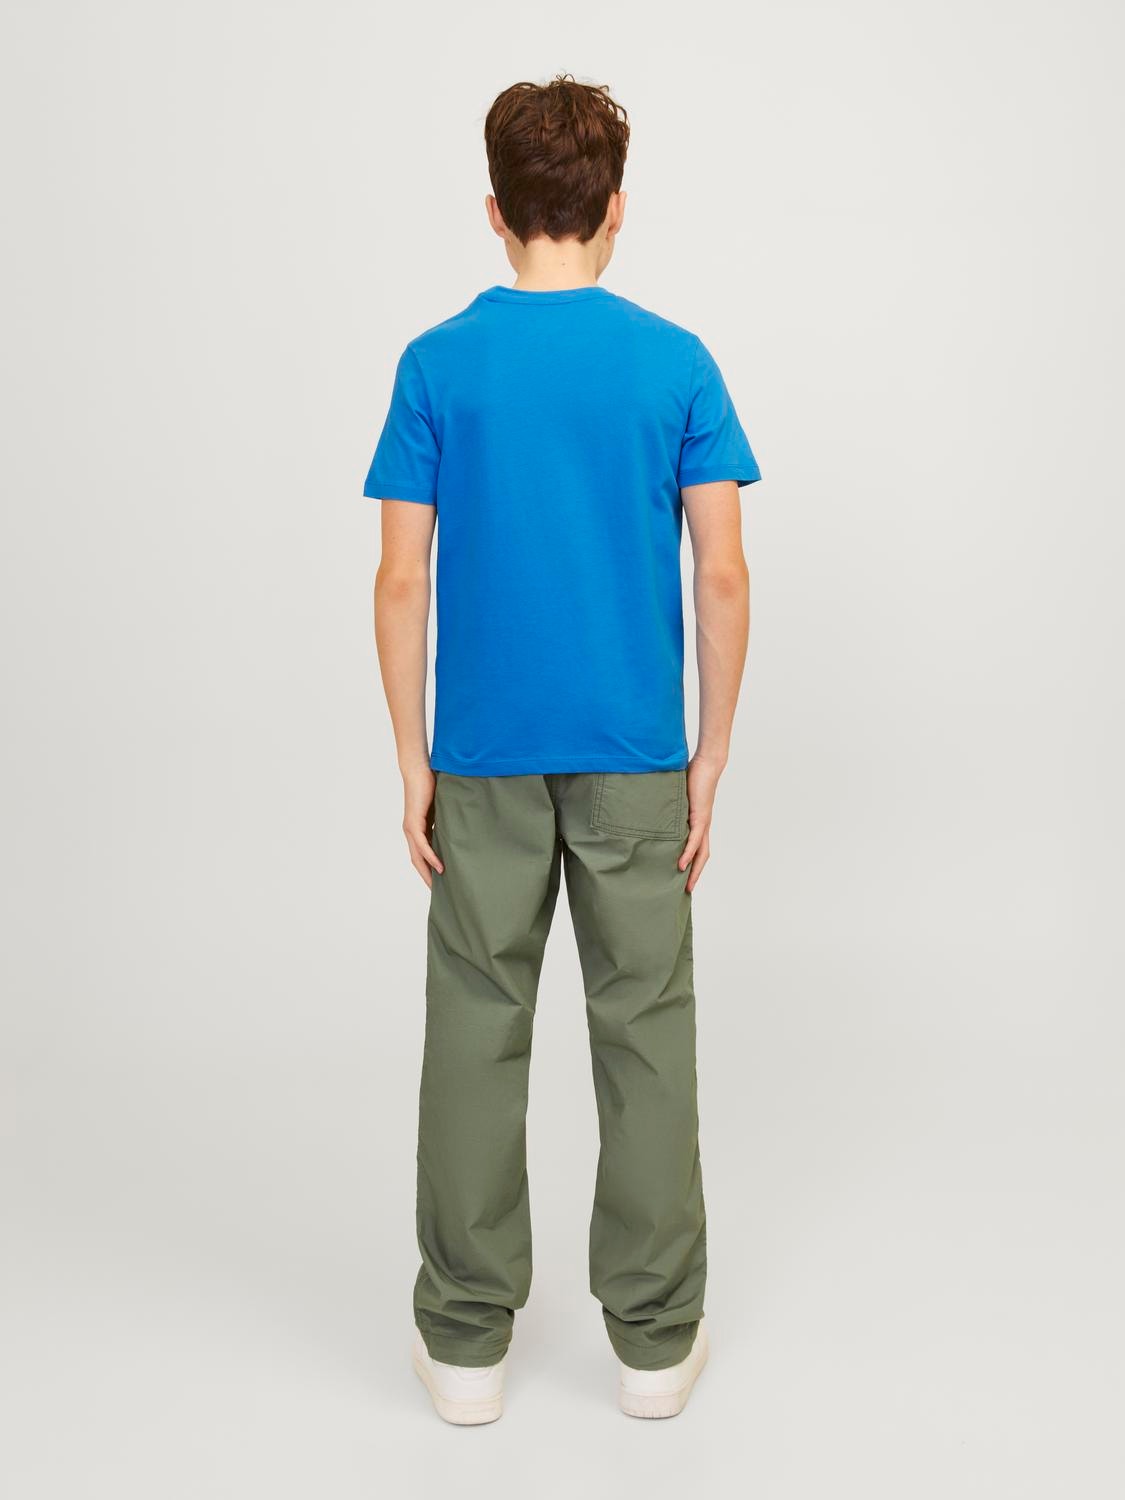 Jack & Jones Printed T-shirt For boys -French Blue - 12255503